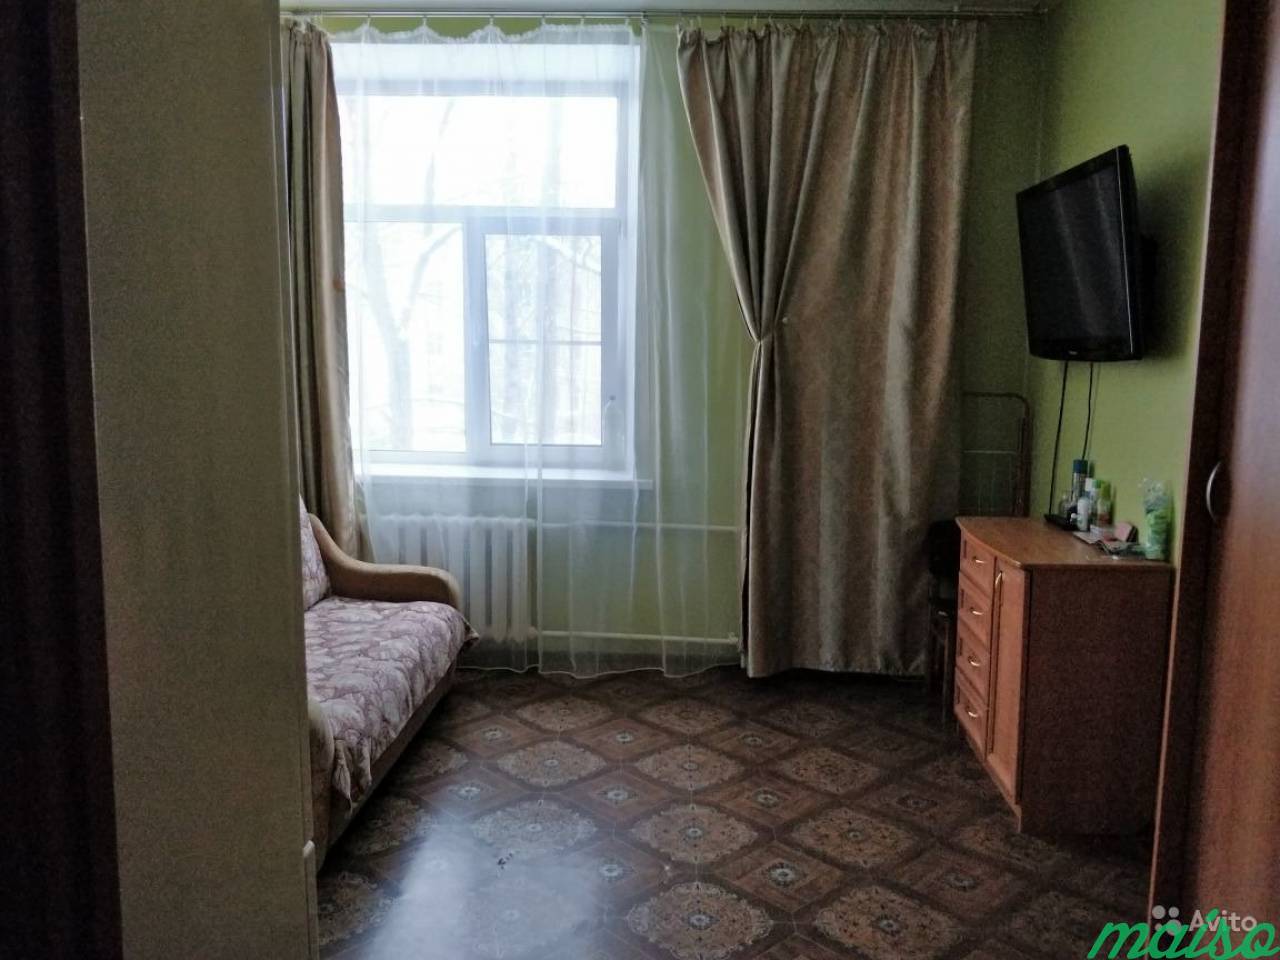 Комната 26.3 м² в 2-к, 2/4 эт. в Санкт-Петербурге. Фото 5